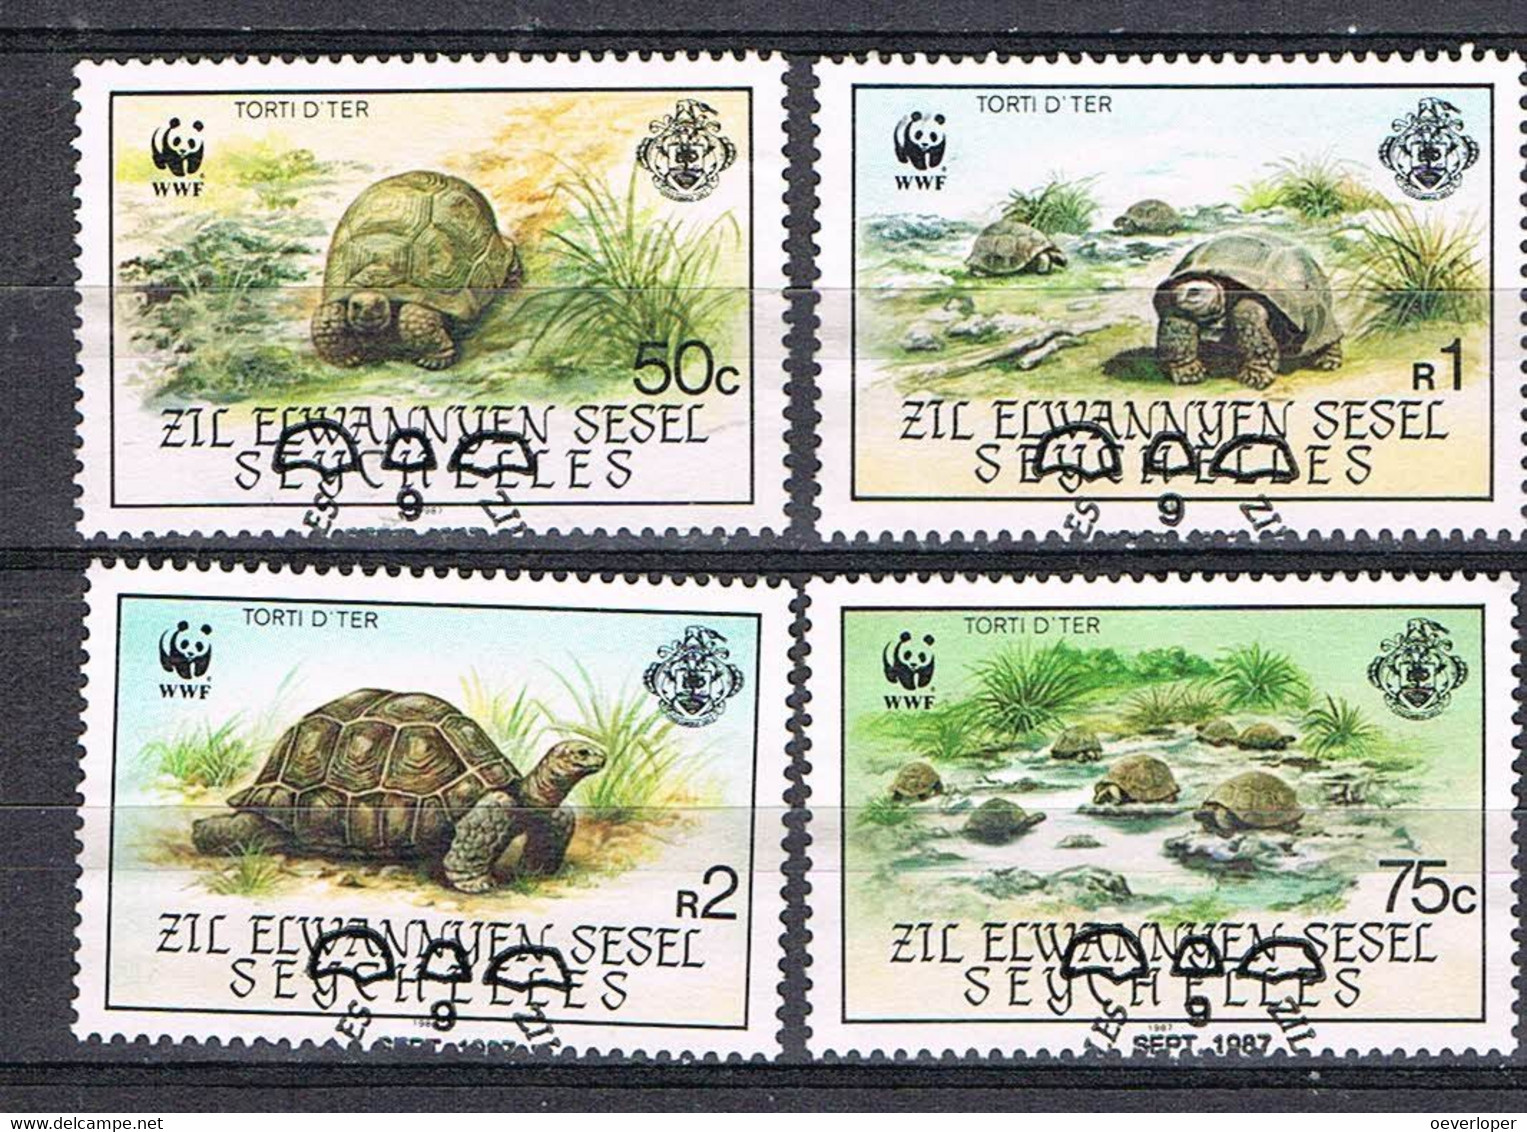 Seychelles 1985 Turtles WWF Used - Gebraucht